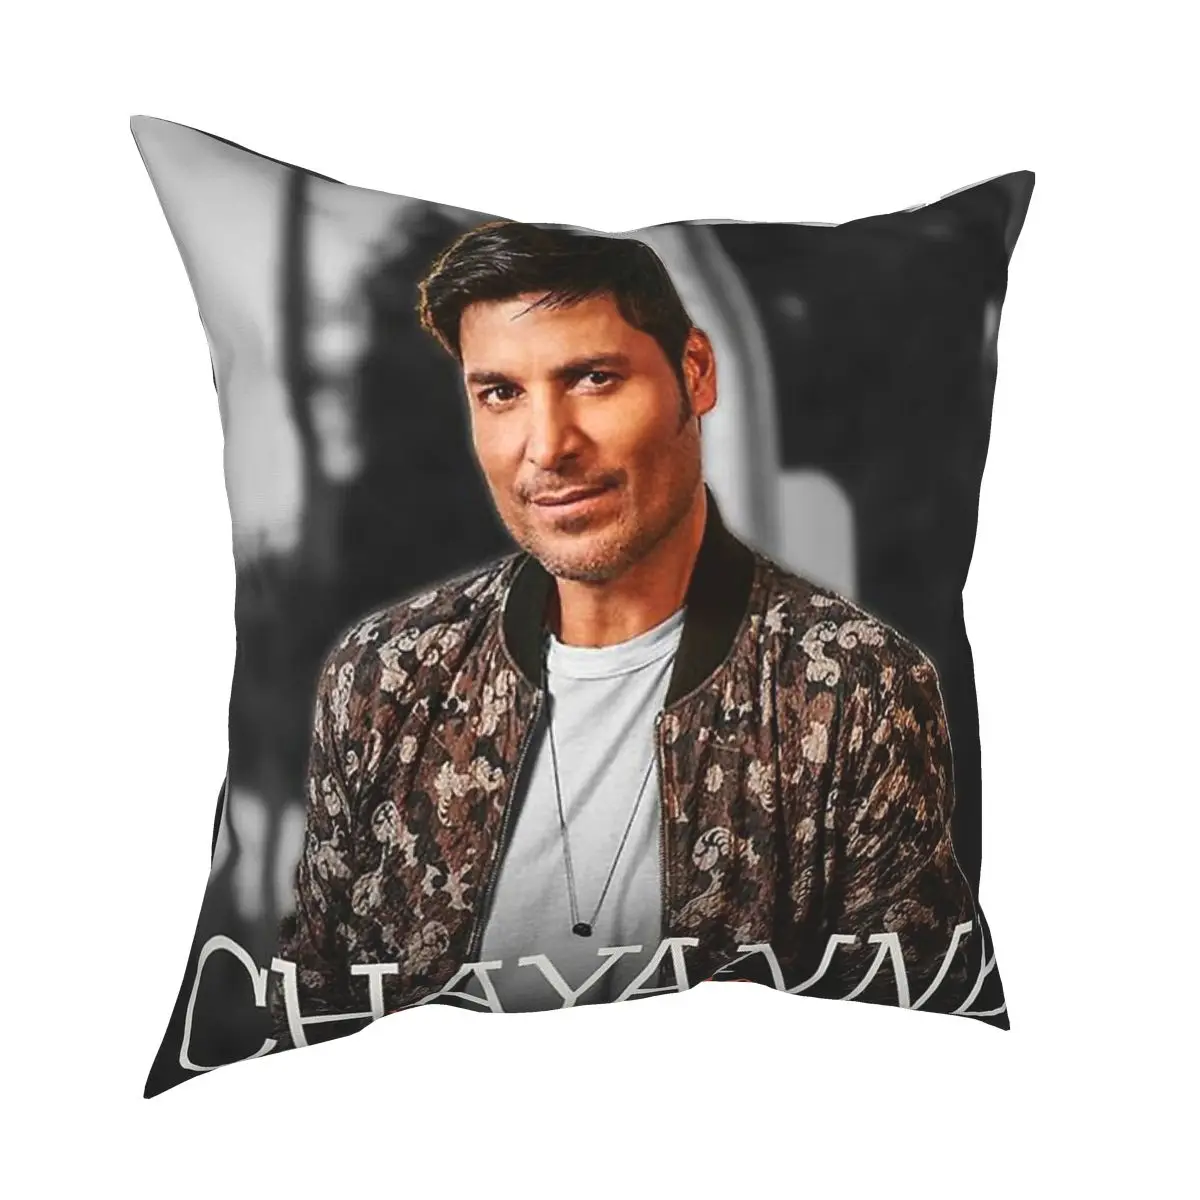 

Bopakal Chayanne Desde El Alma Tour 2019 Pillow Case Cover Decorative Pillowcases Mandala Cushion